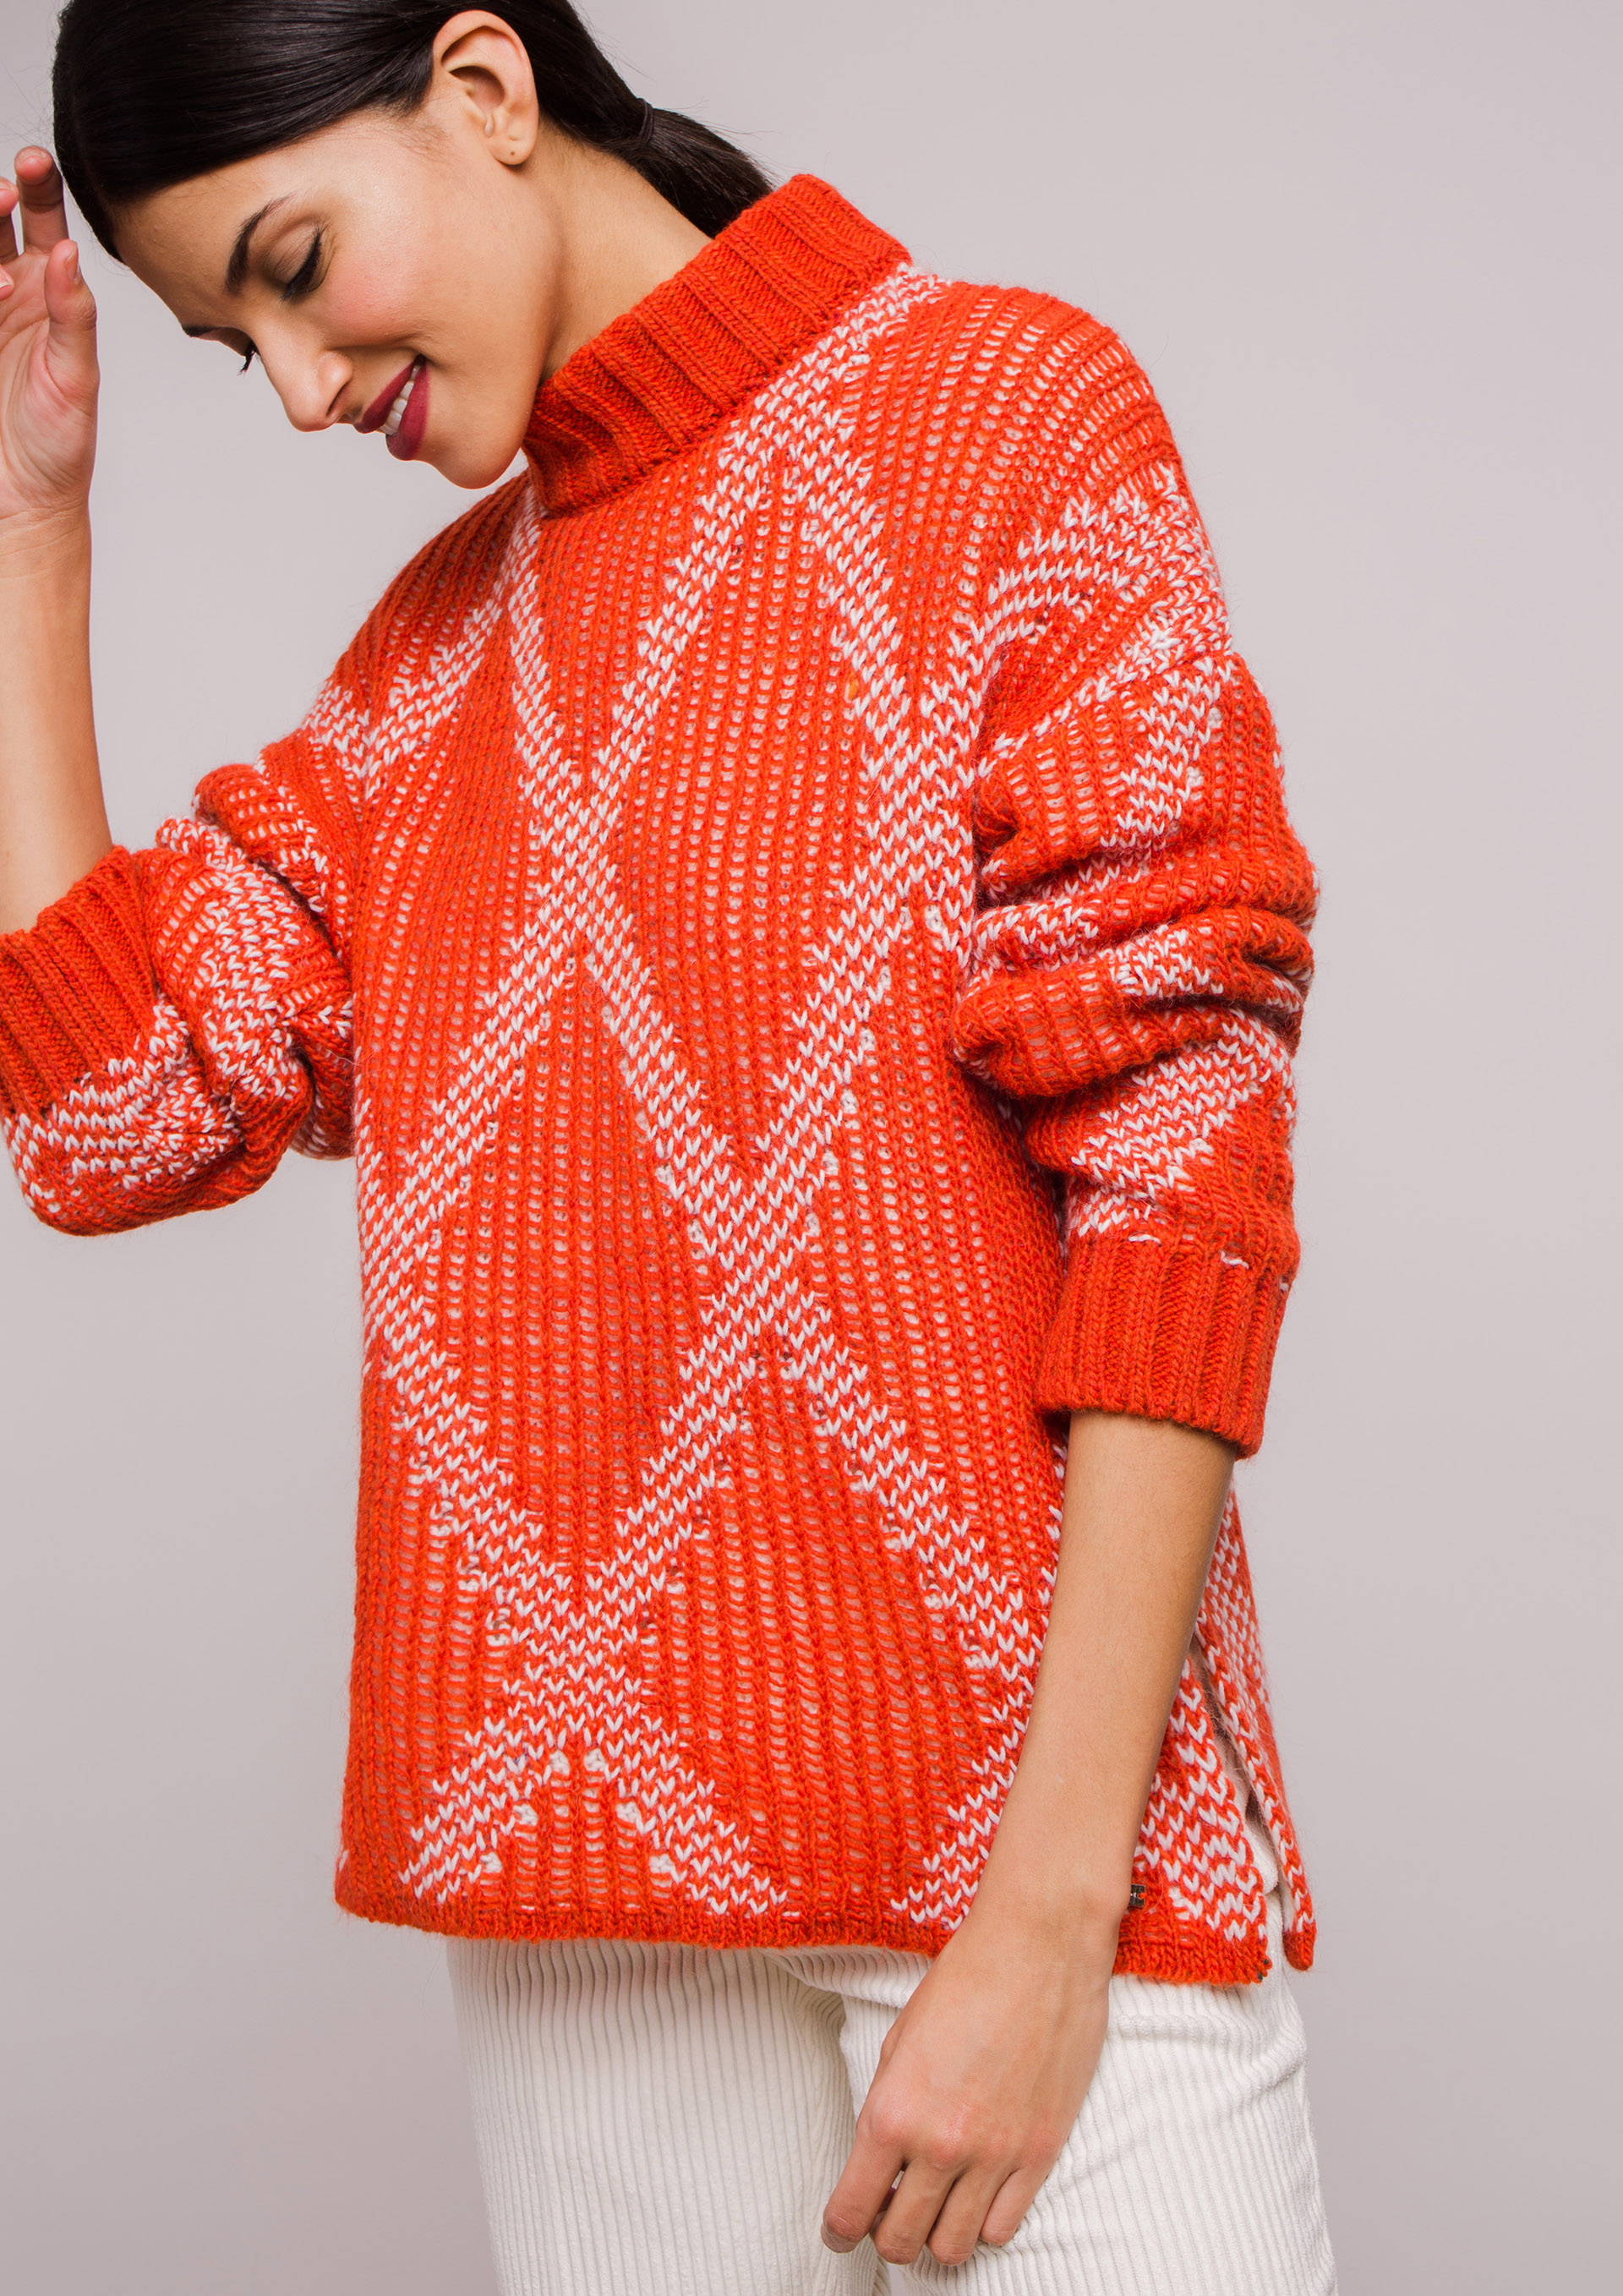 Orange knit sweater with diamond pattern.